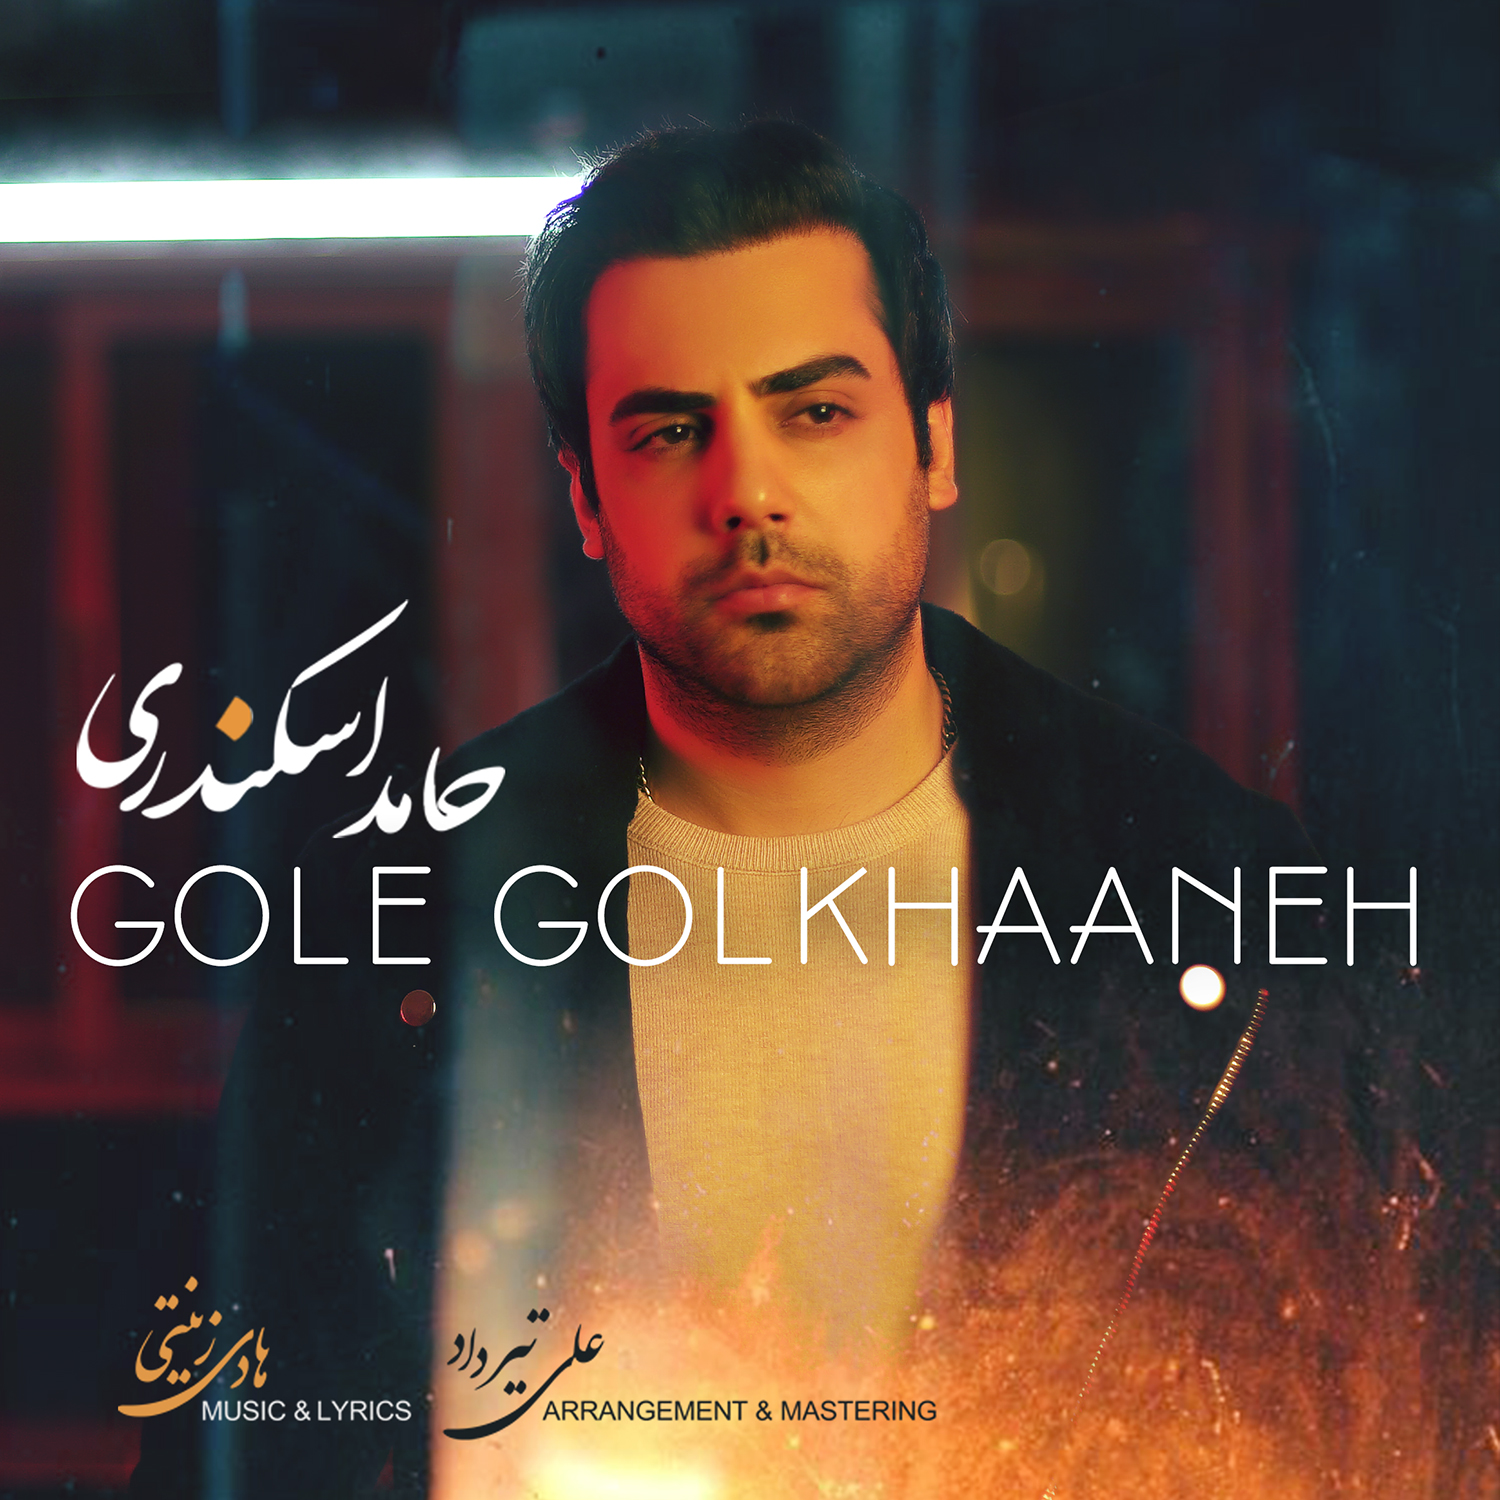  دانلود آهنگ جدید حامد اسکندری - گلِ گل خانه | Download New Music By Hamed Eskandari  - Gole Gol Khaneh